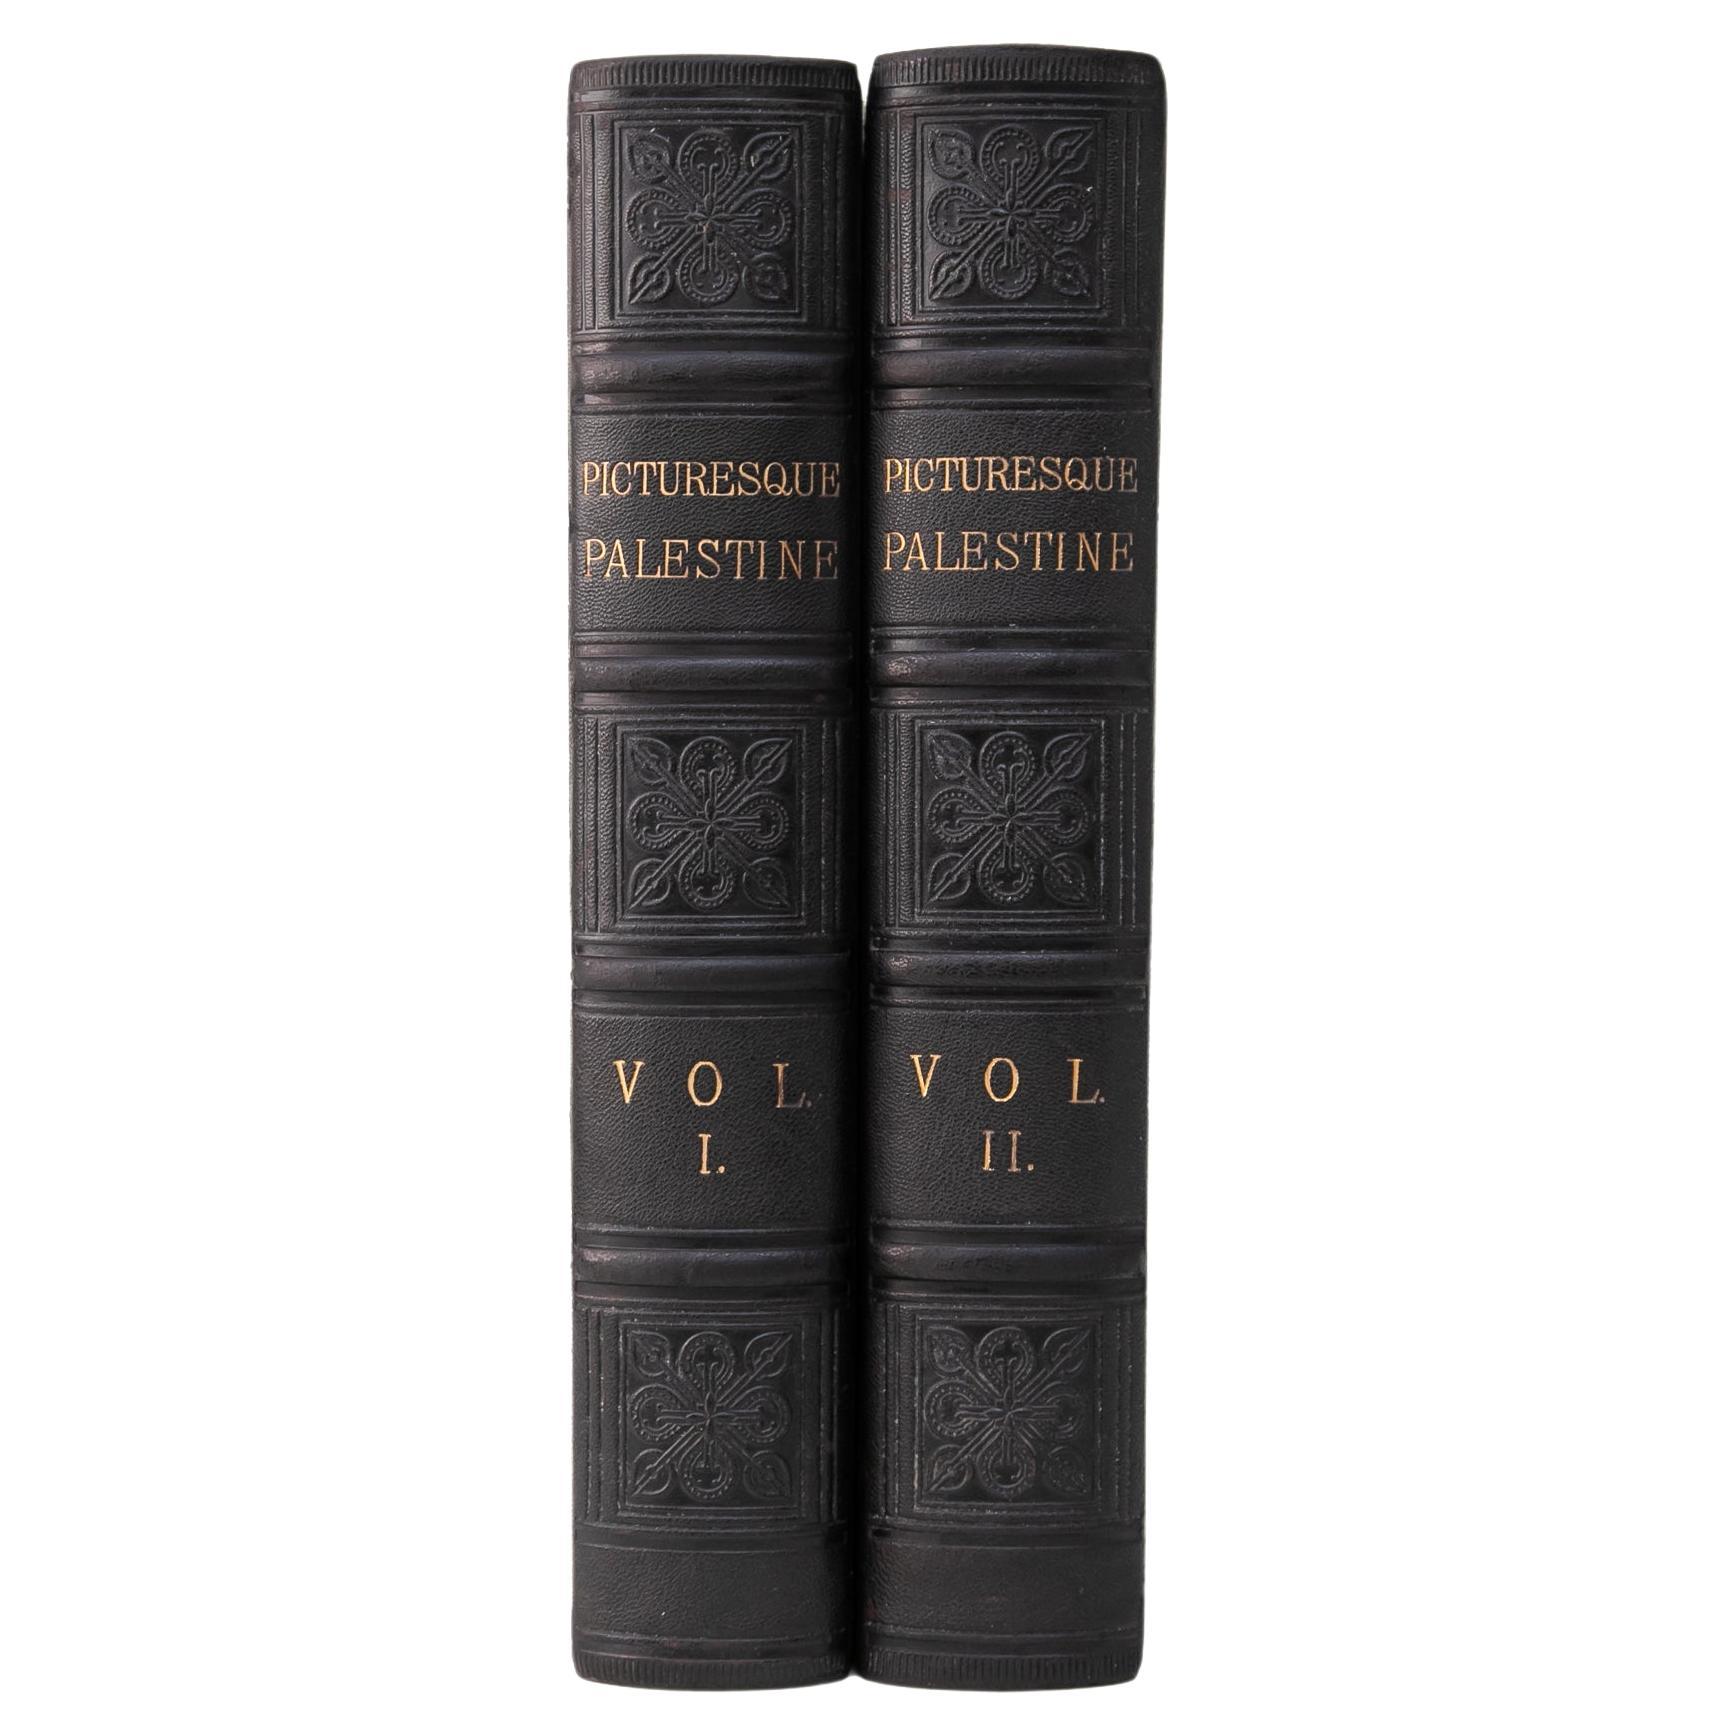 2 Volumes. Colonel Wilson, Picturesque Palestine, Sinai & Egypt. For Sale